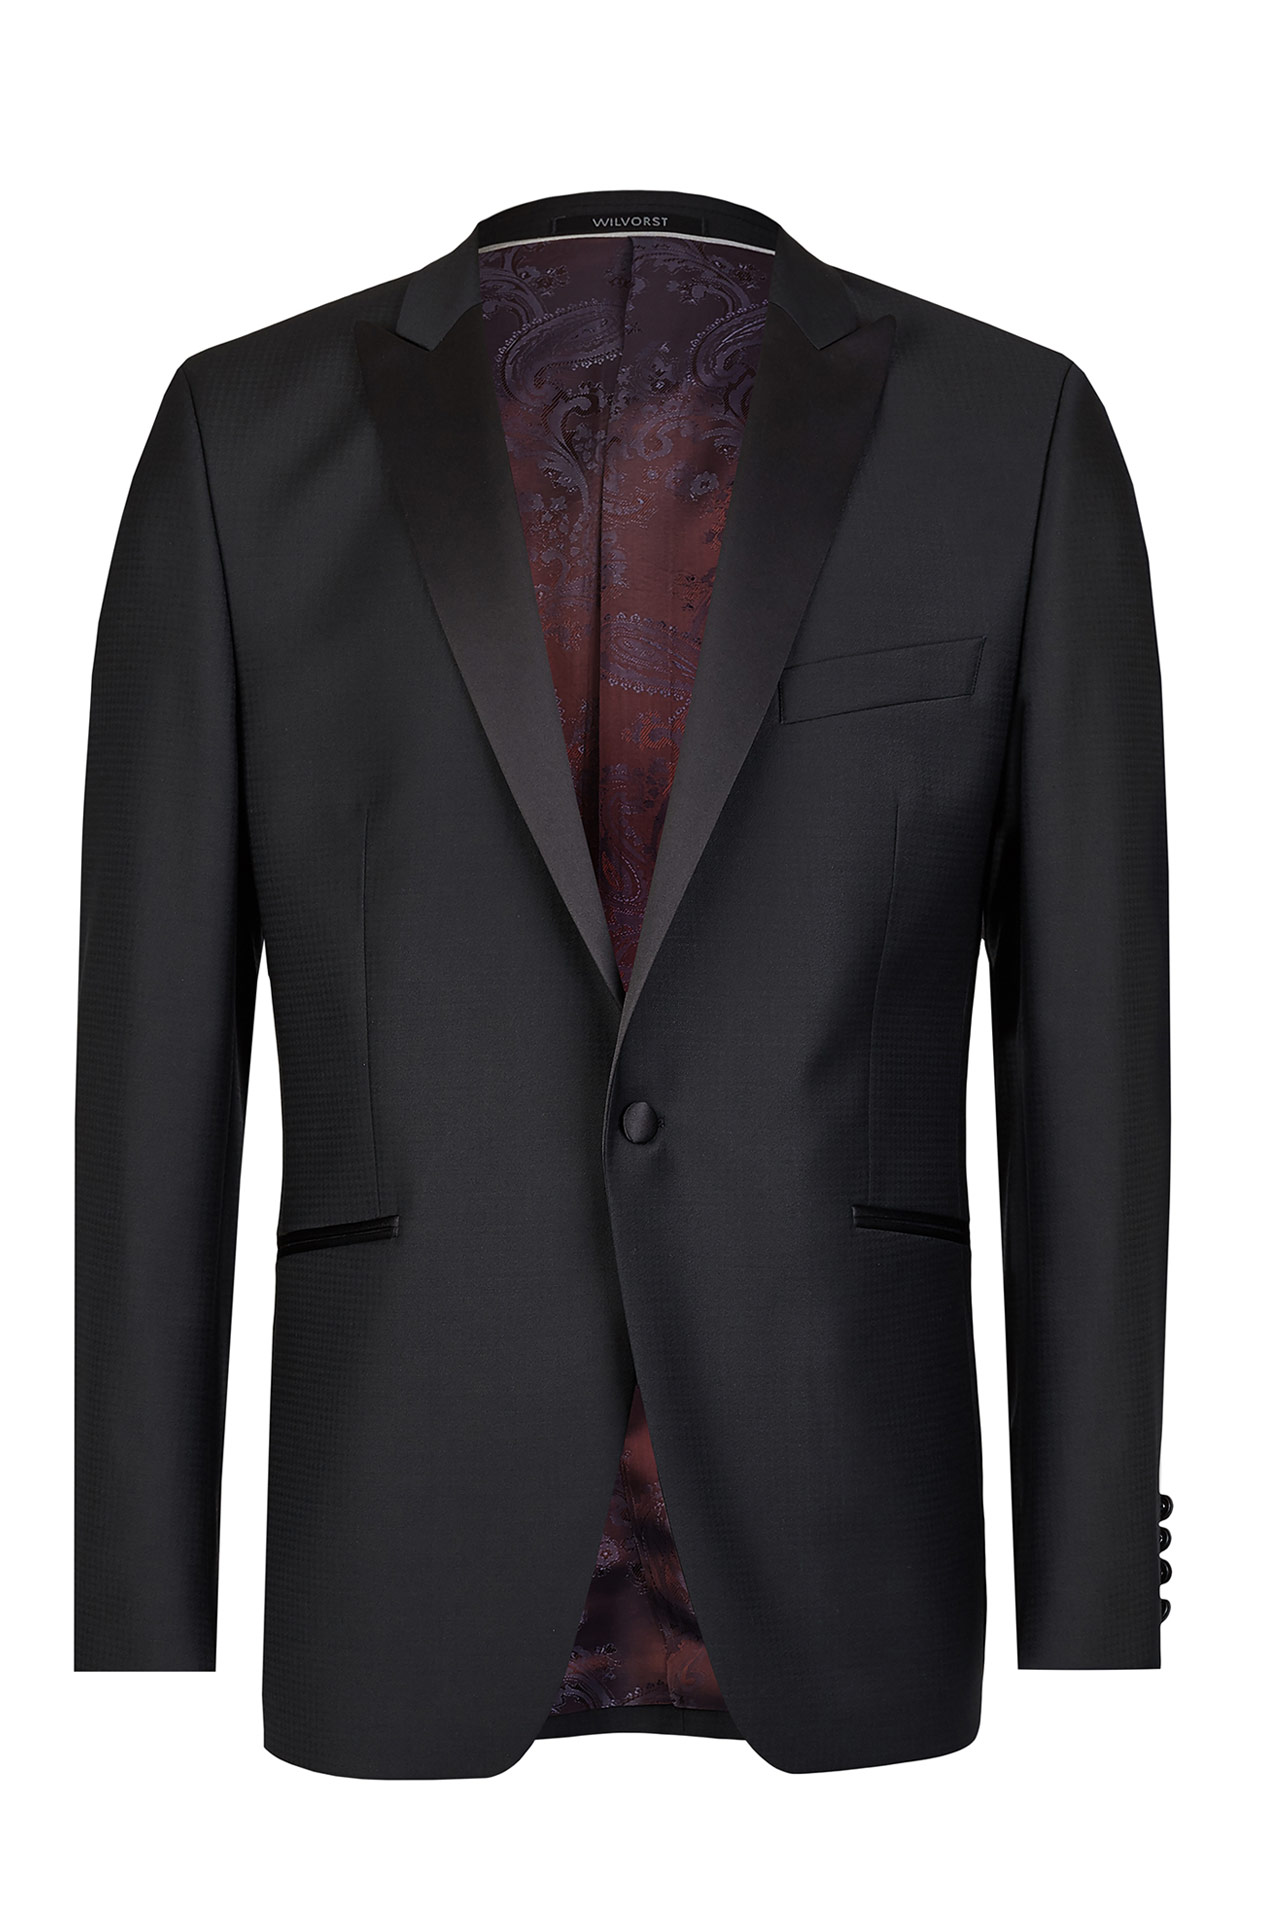 Black Drop 8 Tuxedo - Tom Murphy's Formal and Menswear